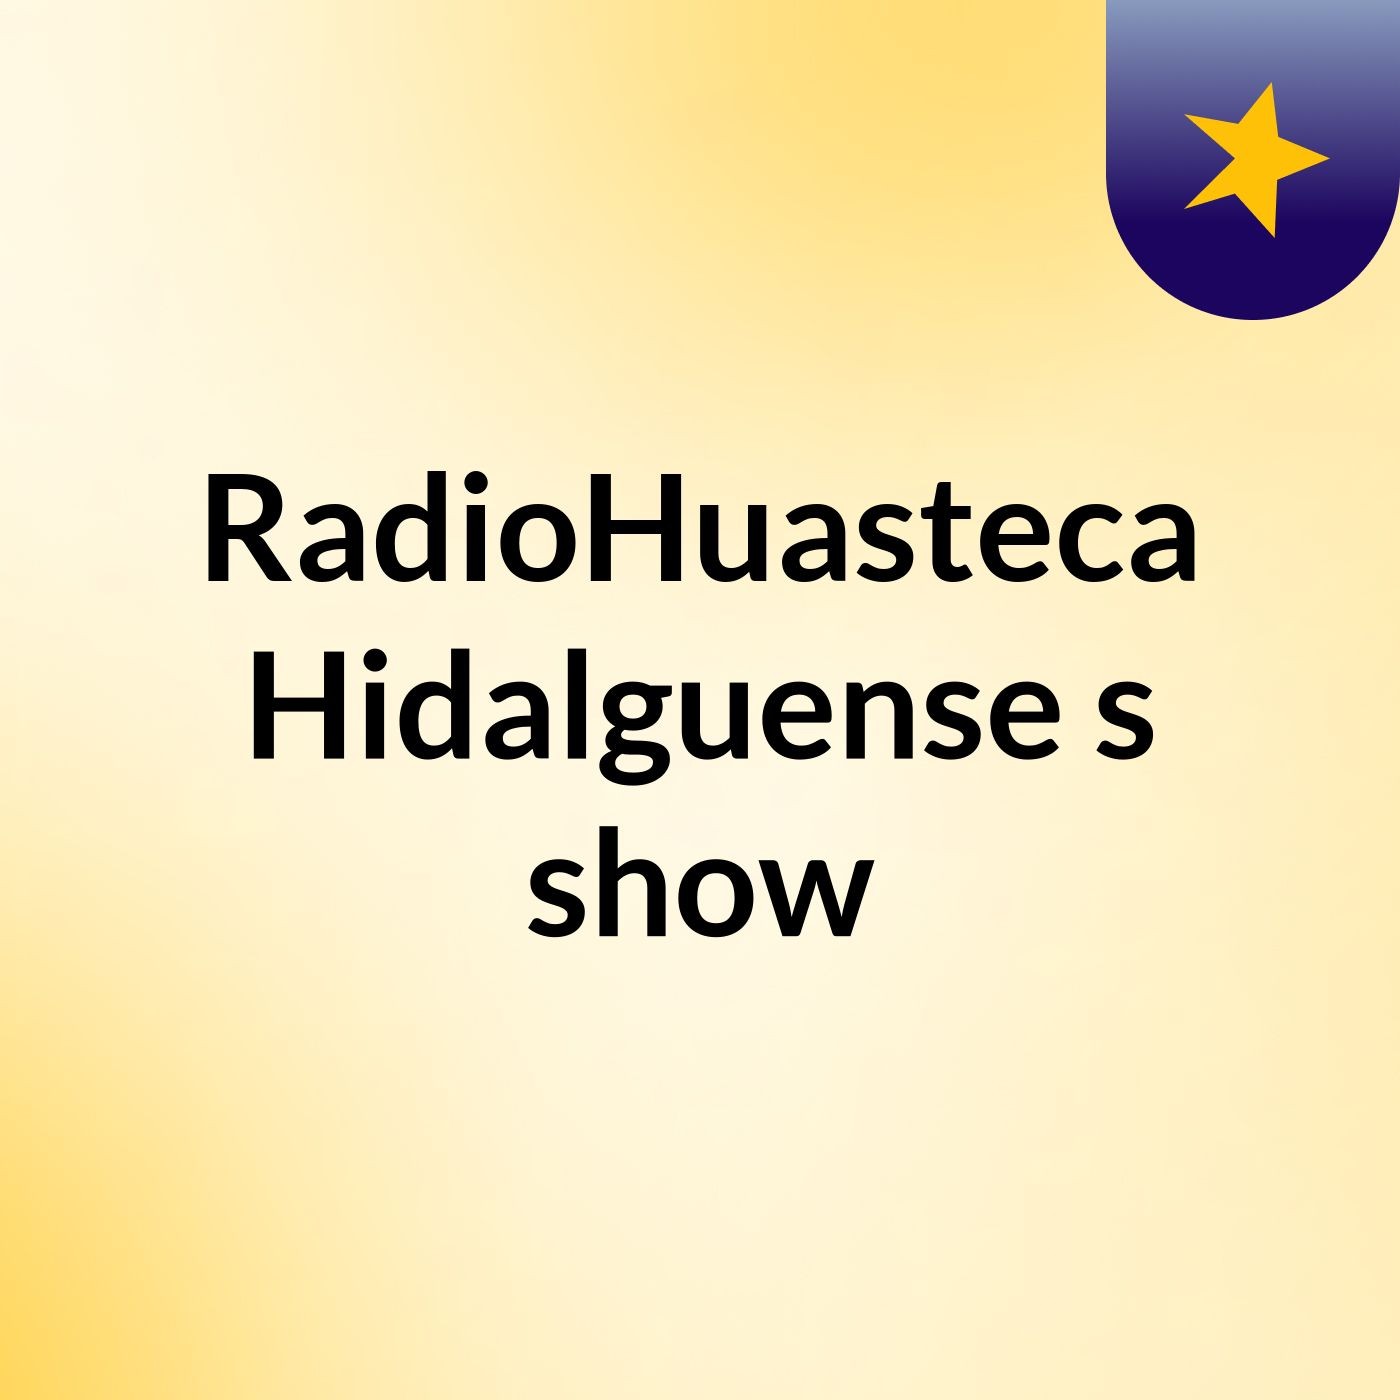 RadioHuasteca Hidalguense's show